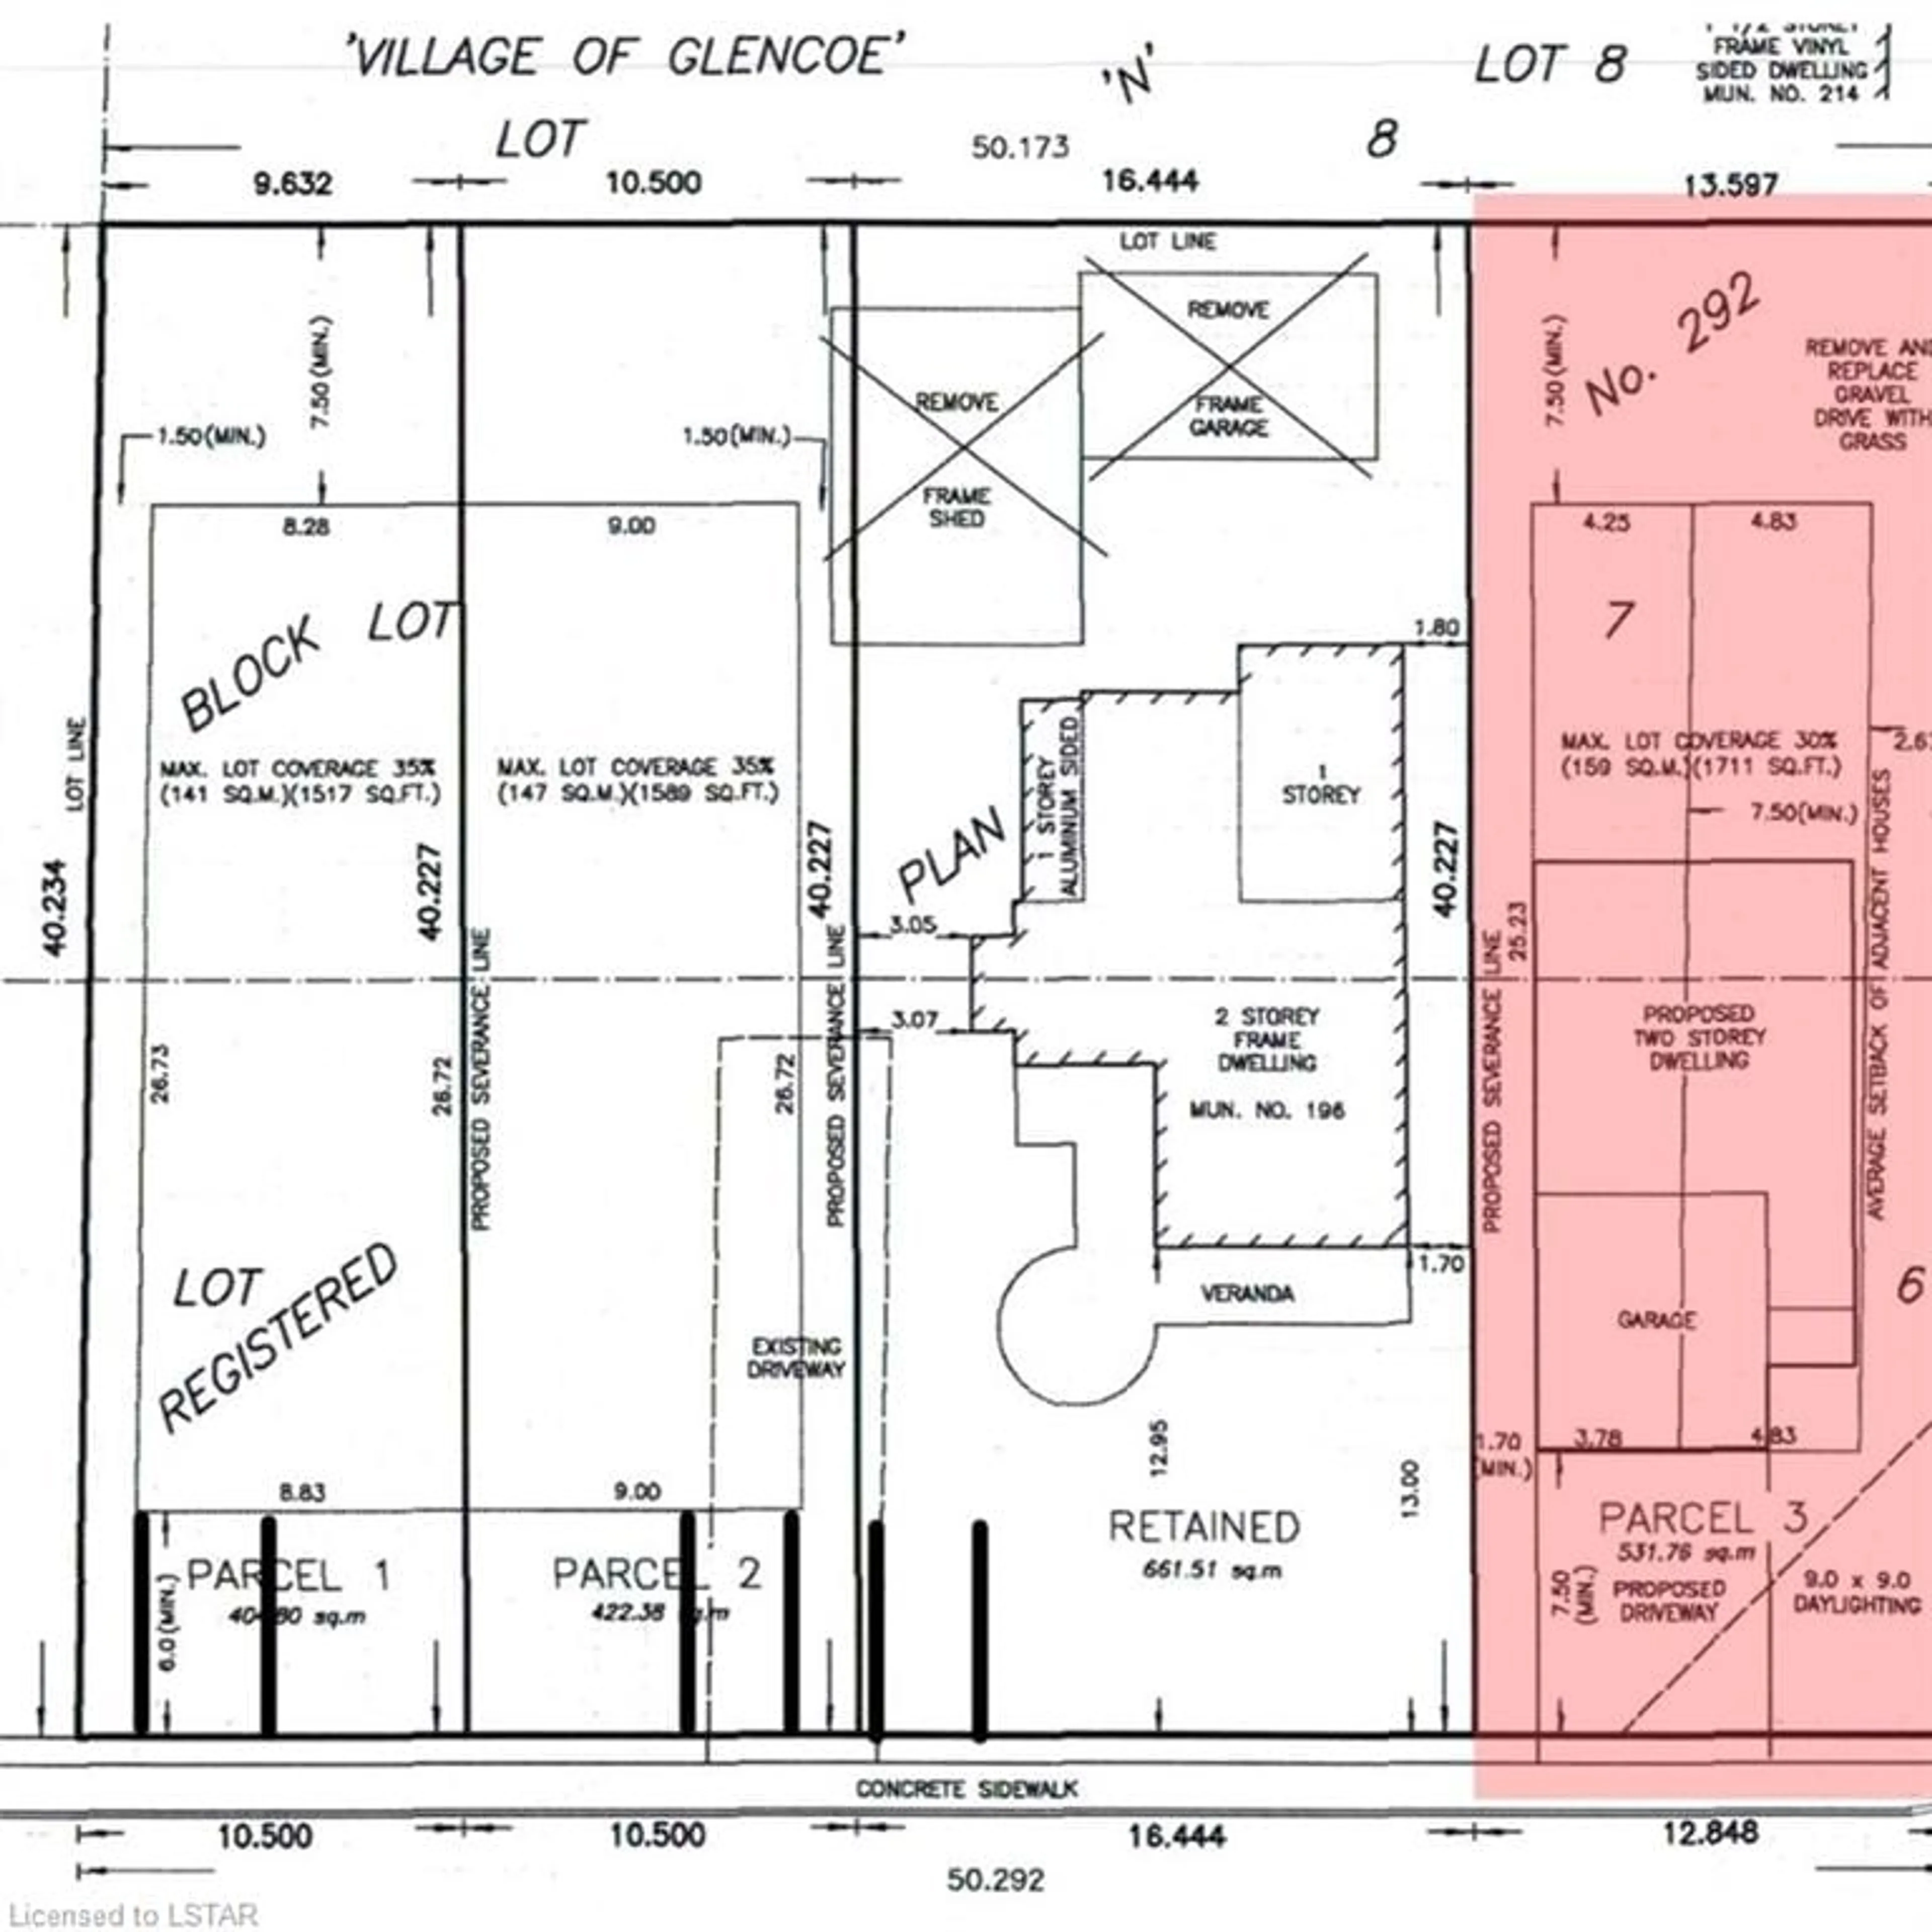 Floor plan for LOT 3 MCRAE Mcrae St, Glencoe Ontario N0L 1M0